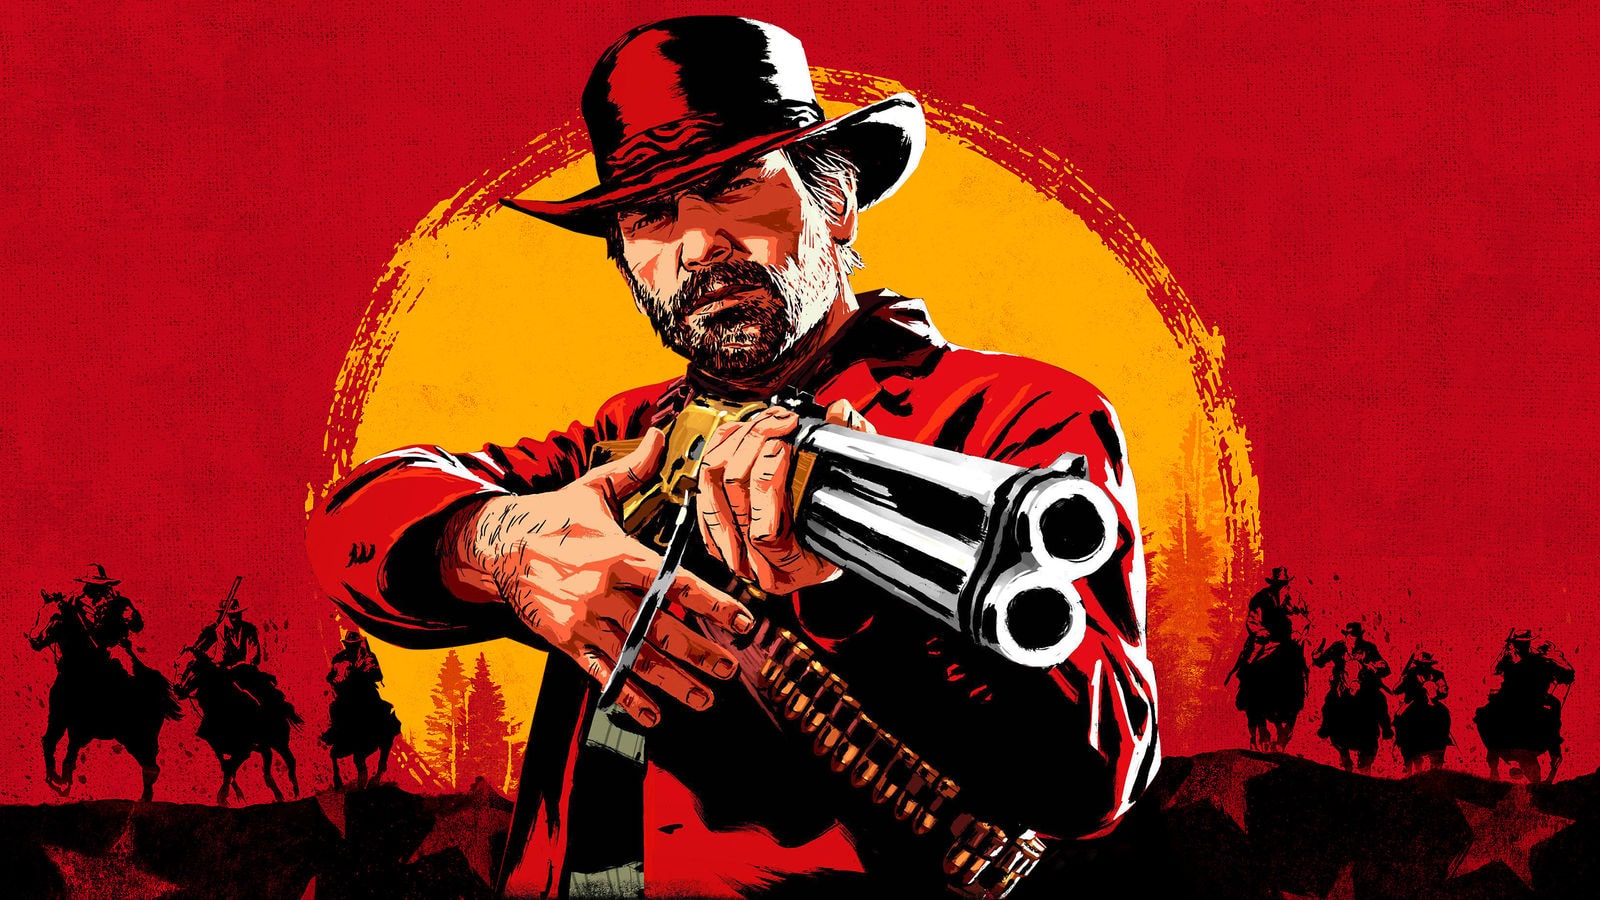 Red Dead Redemption 2 (RDR2)